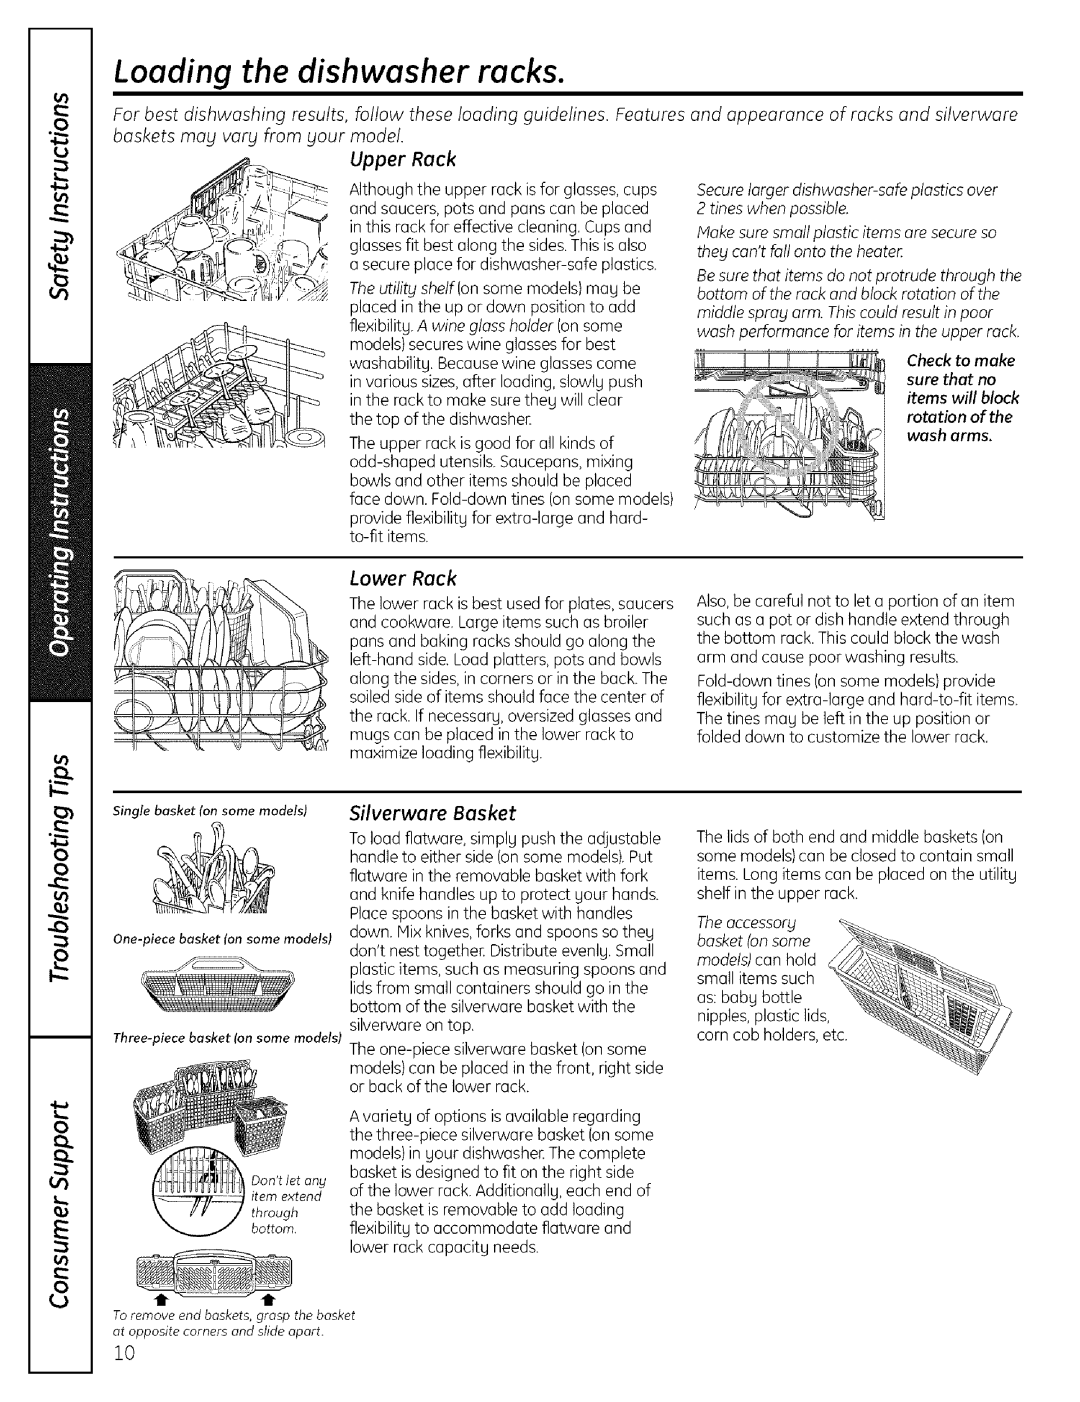 GE EDWSO00 manual Loading the dishwasher racks, Upper Rack, Lower Rack, Silverware Basket 